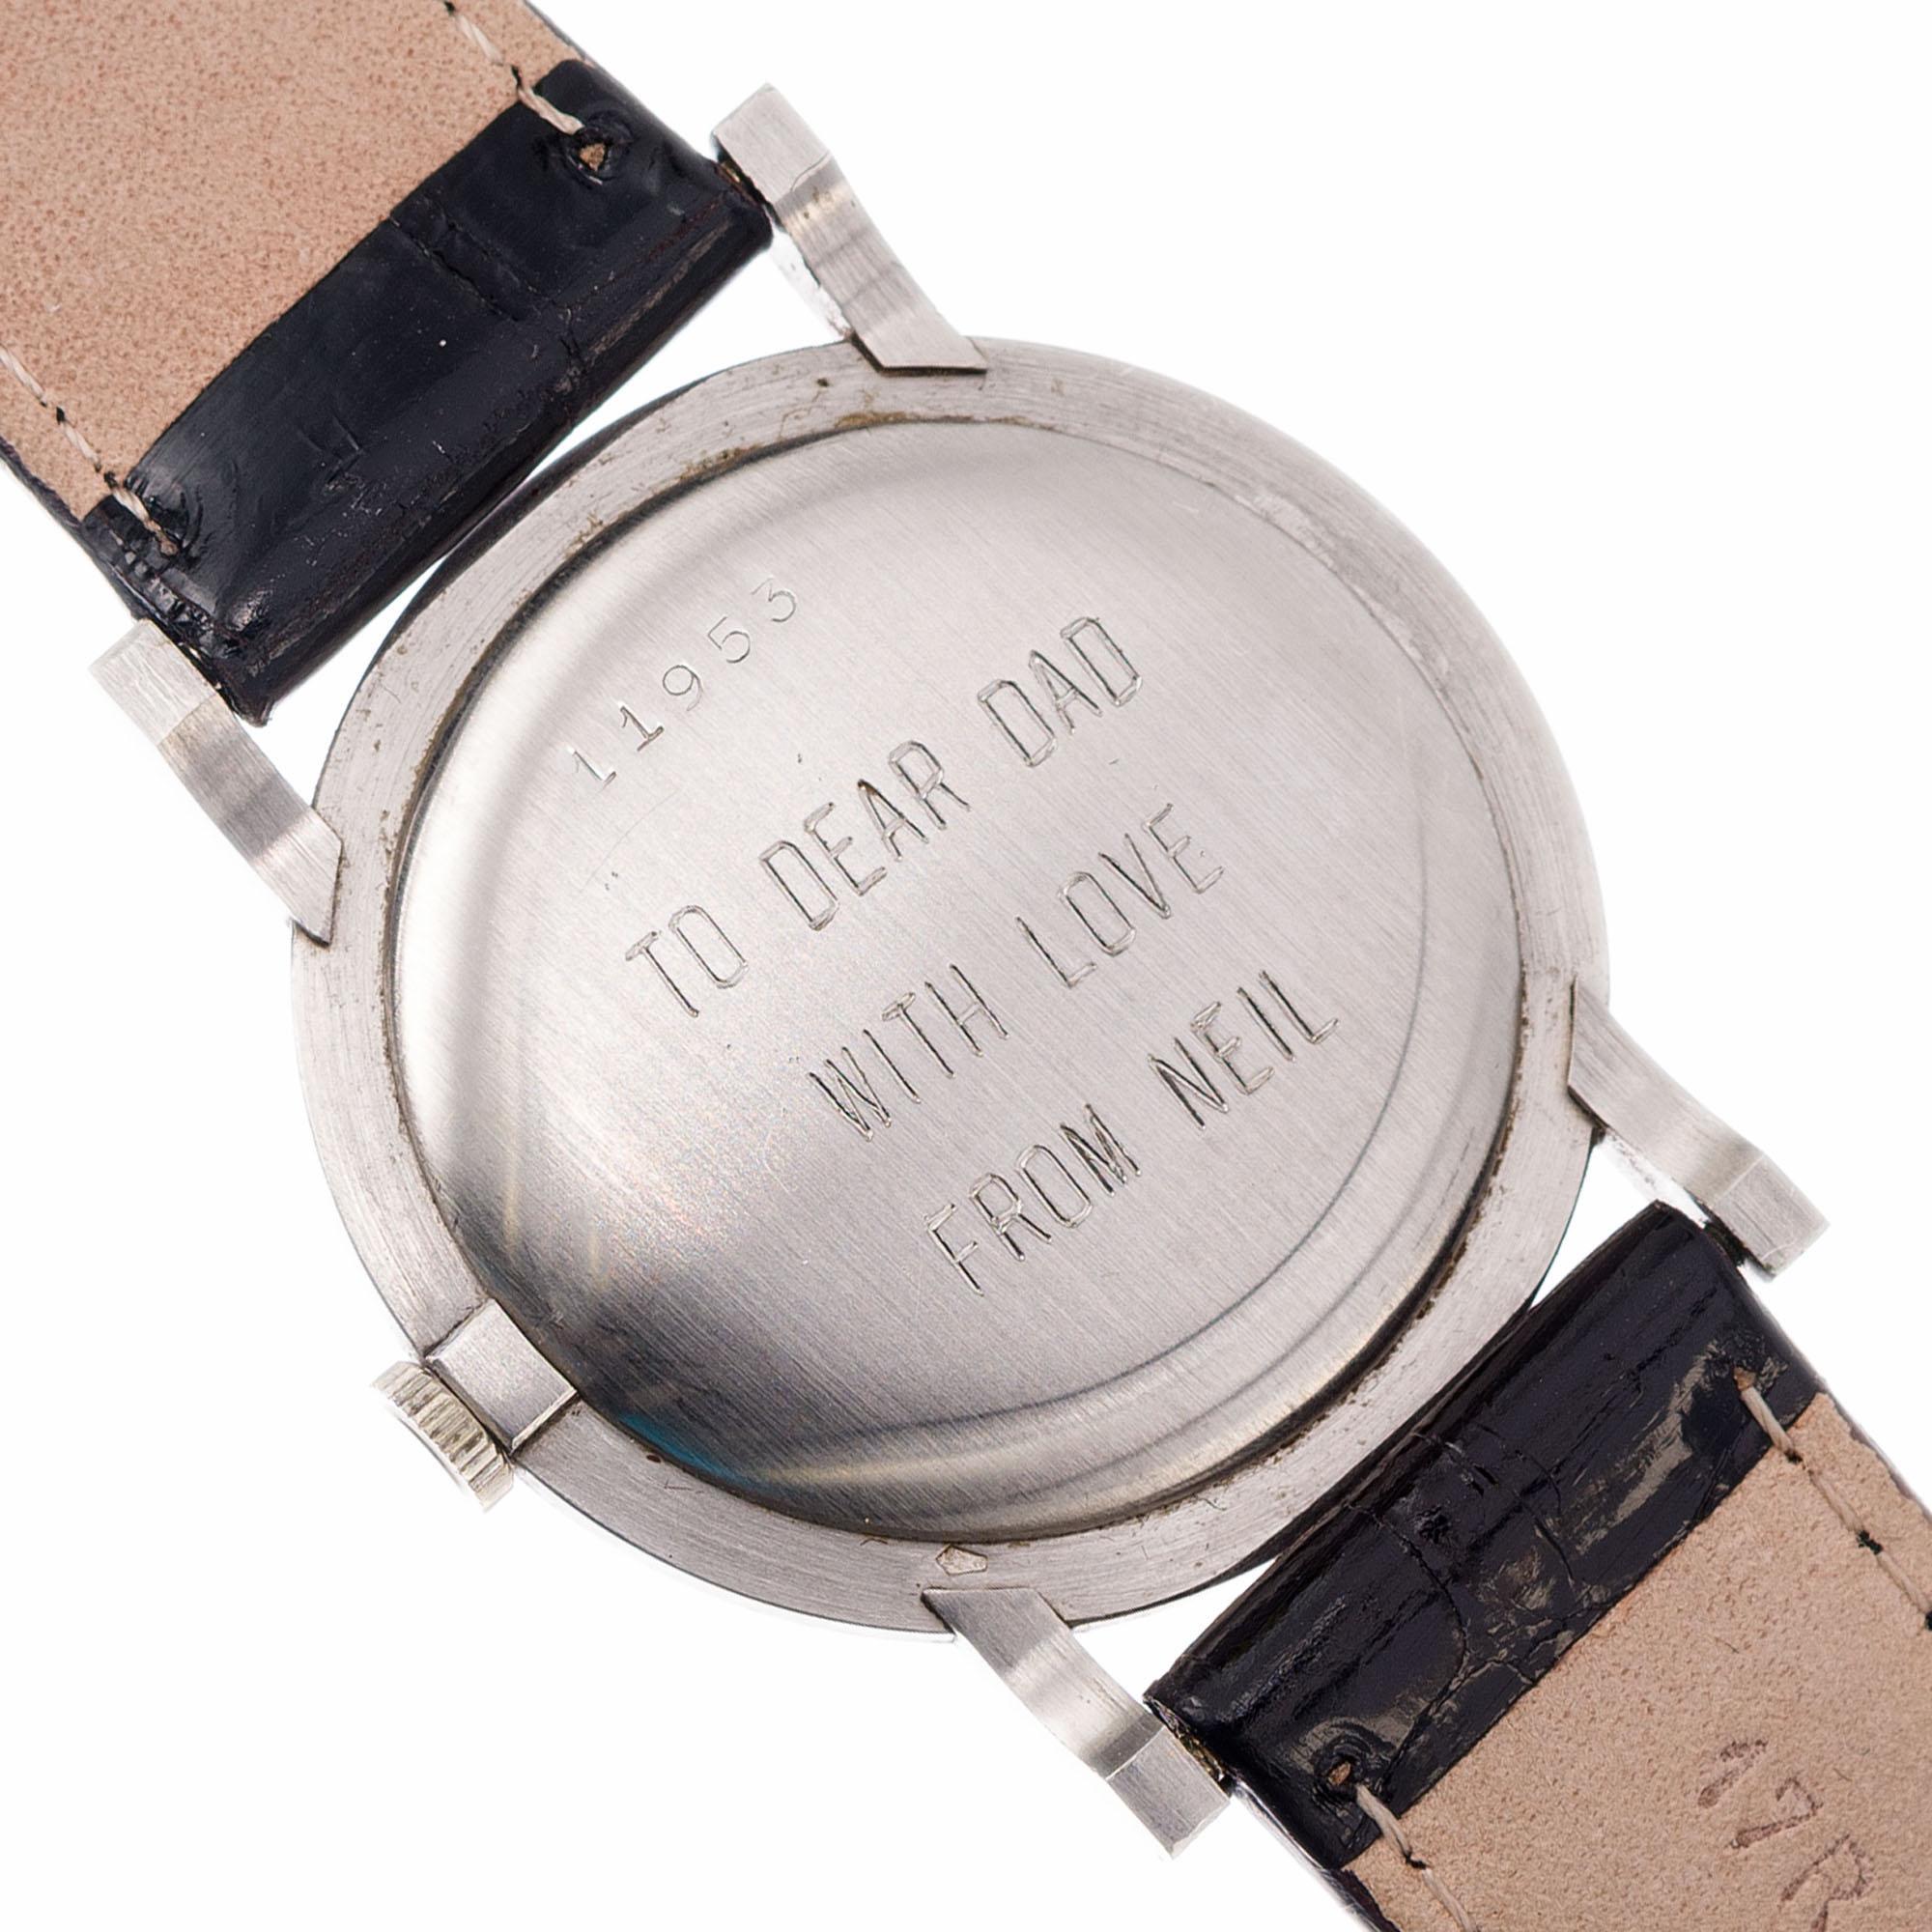 Audemars Piguet Platinum Manual Wind Wristwatch In Good Condition For Sale In Stamford, CT